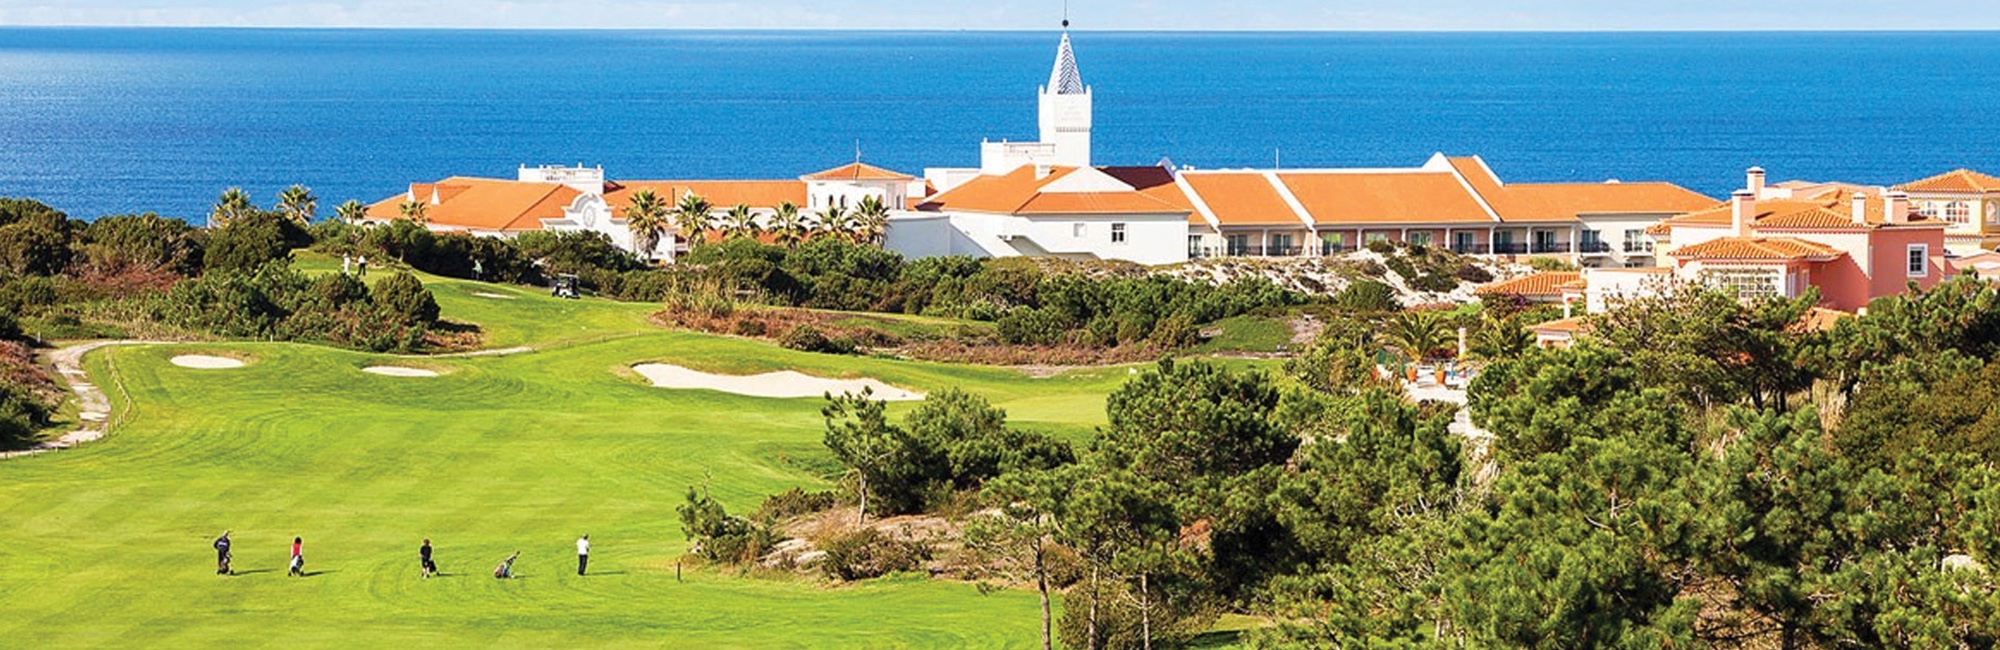 Praia D'el Rey Golf & Beach Resort Banner